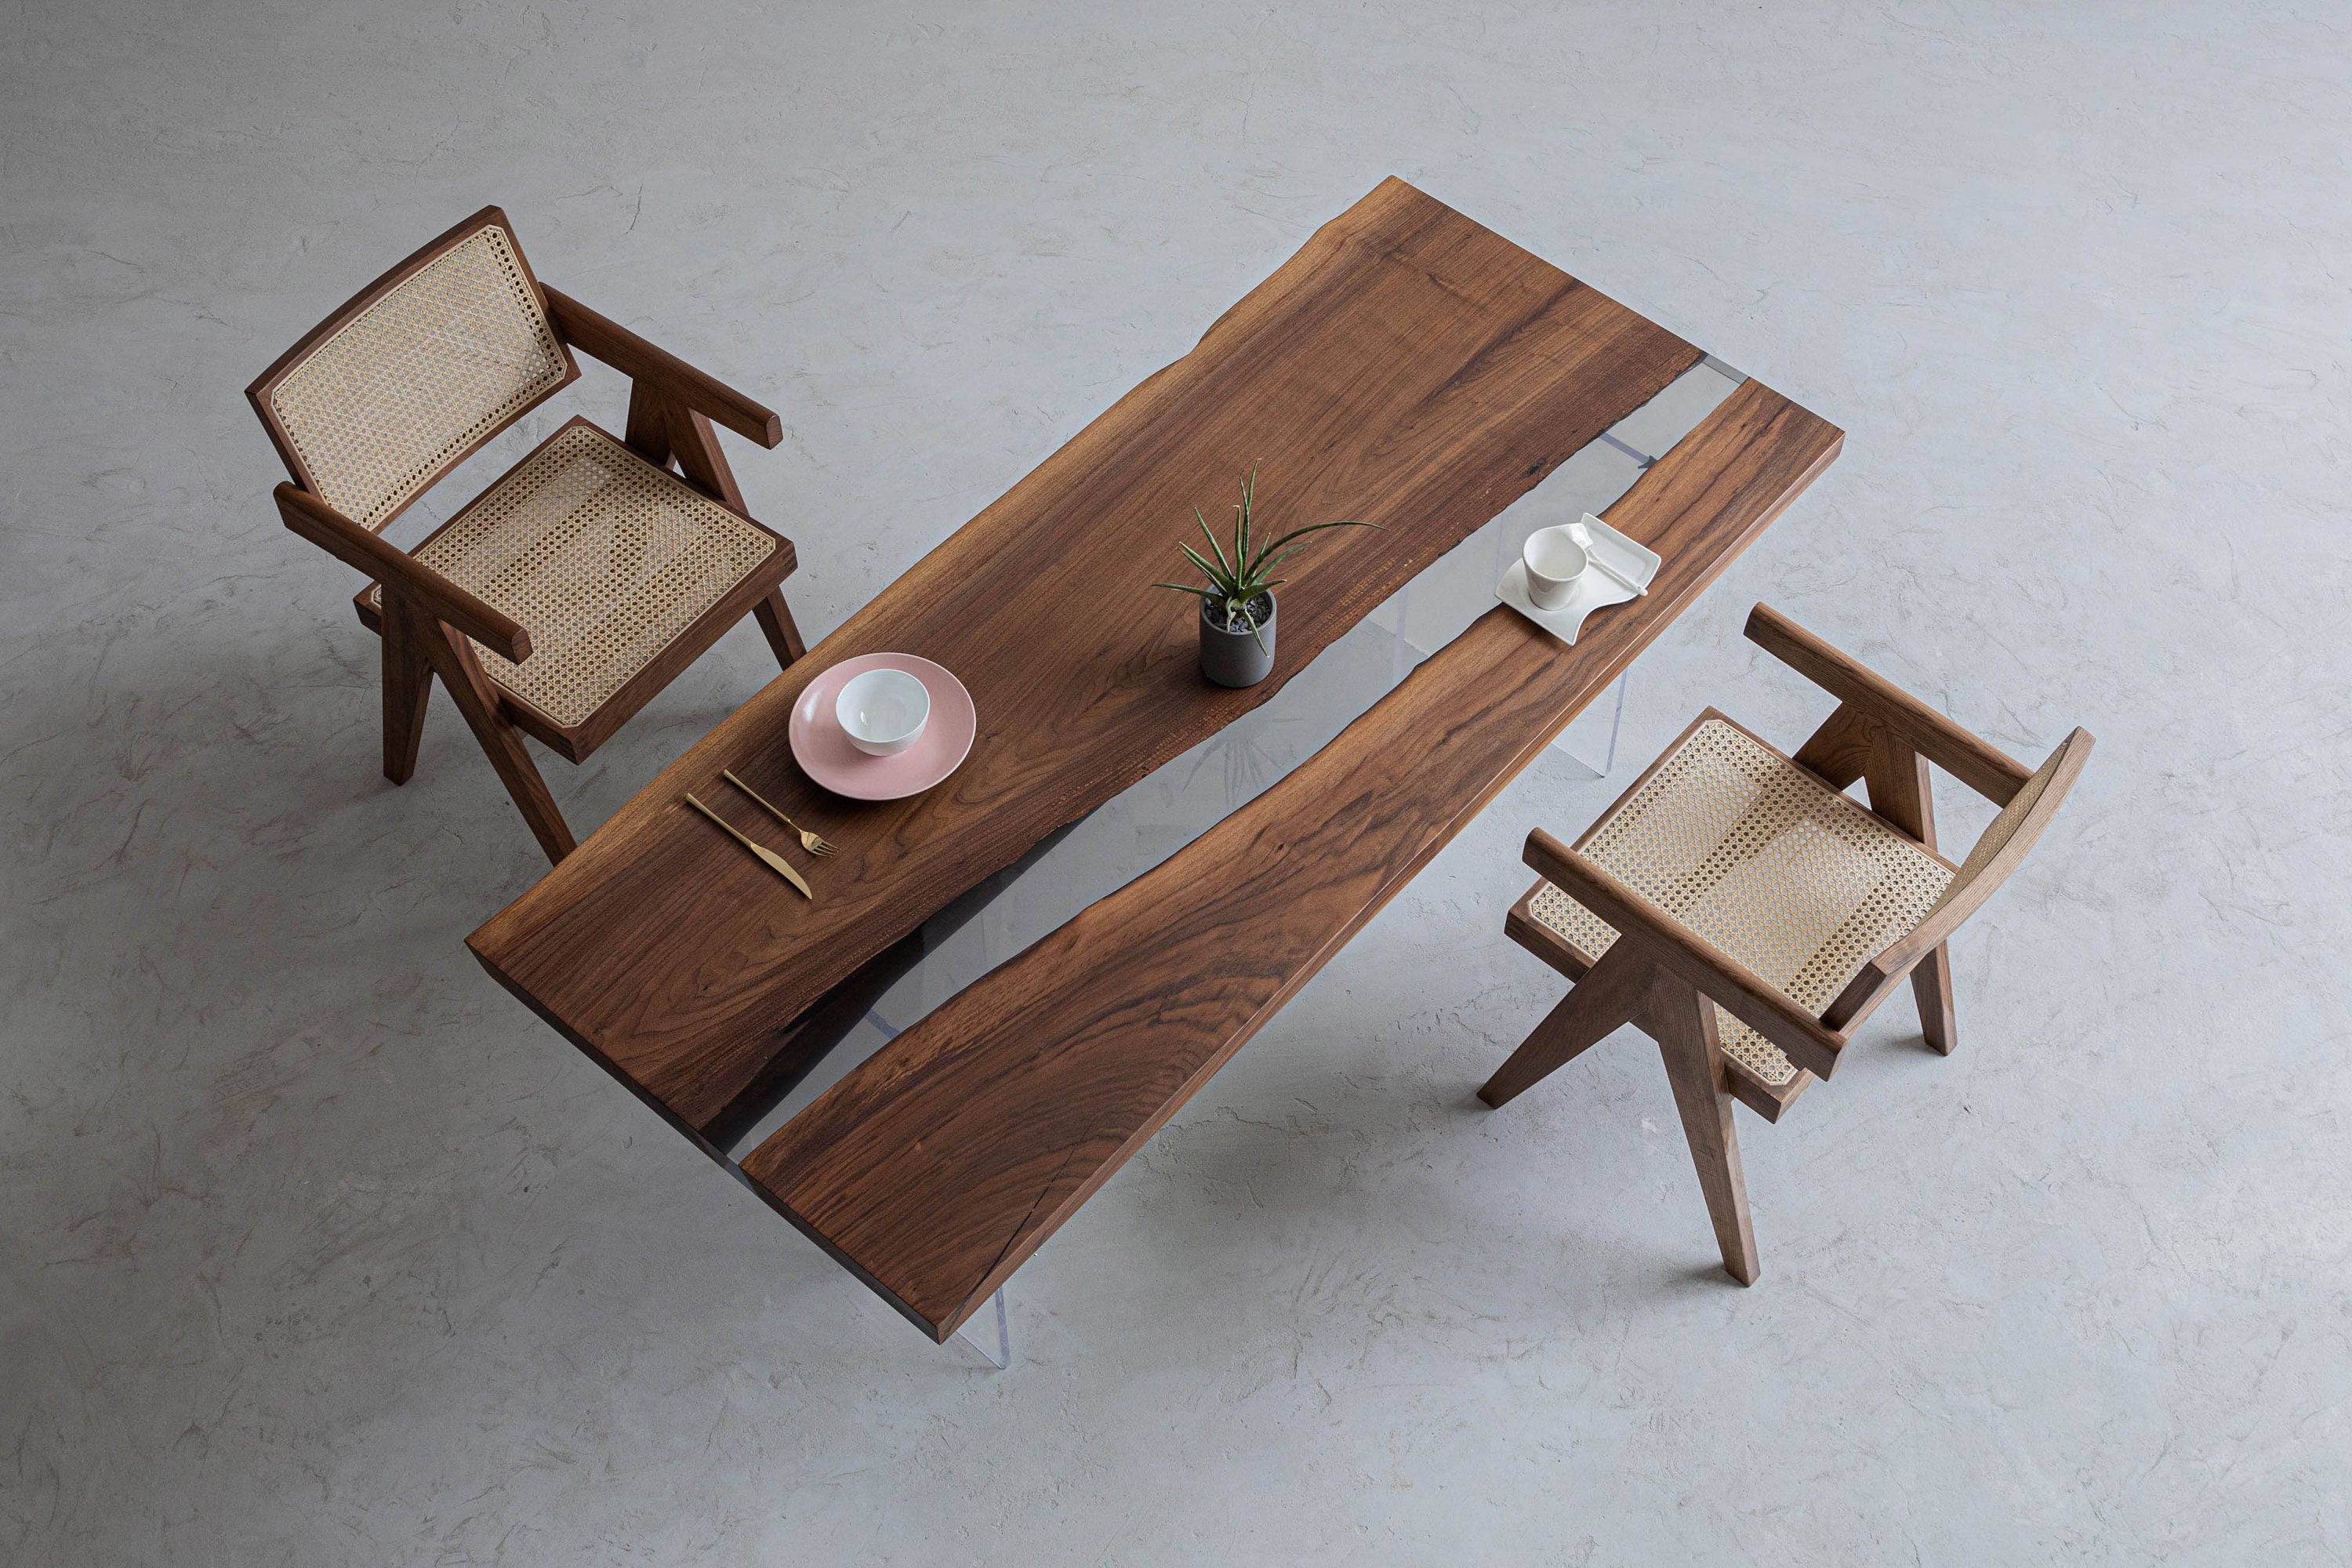 Handmade epoxy table, Transparent Furniture Vivid Edge, Special Epoxy Wood Resin table